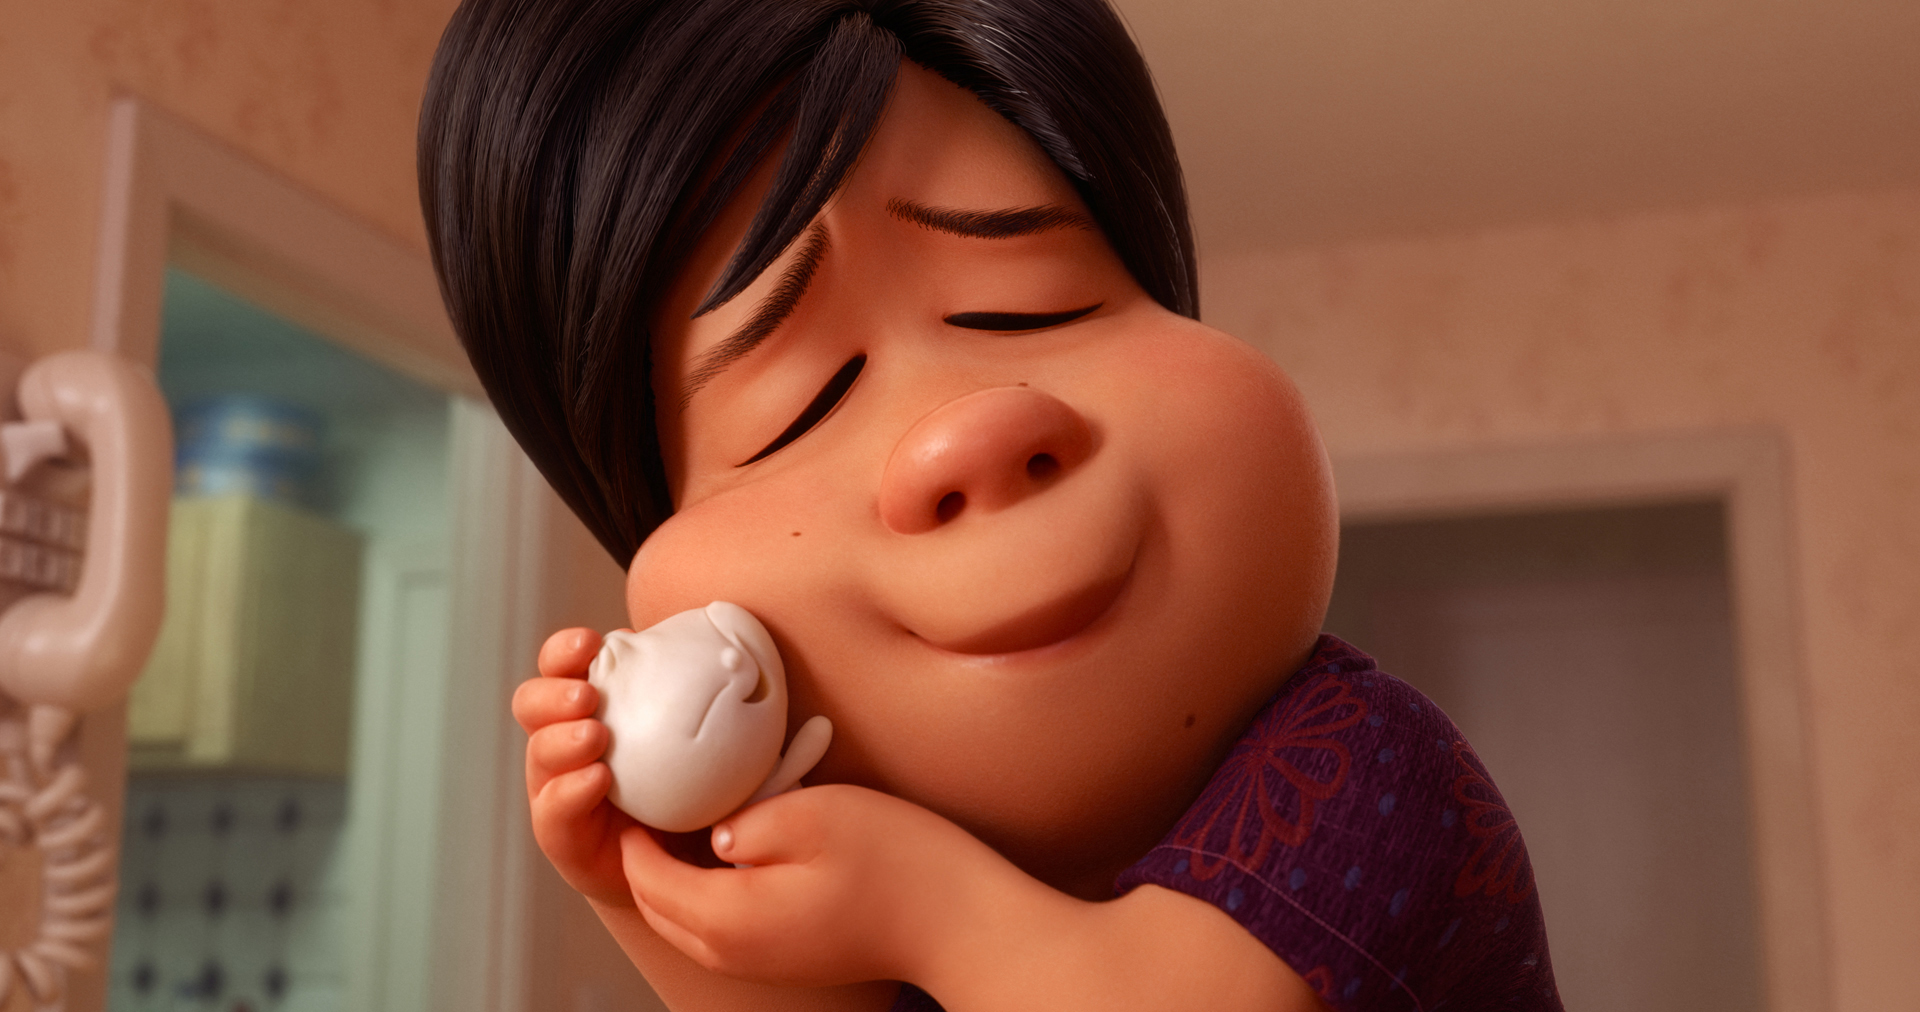 Pixar short Bao about a dumpling come to life up for Oscar